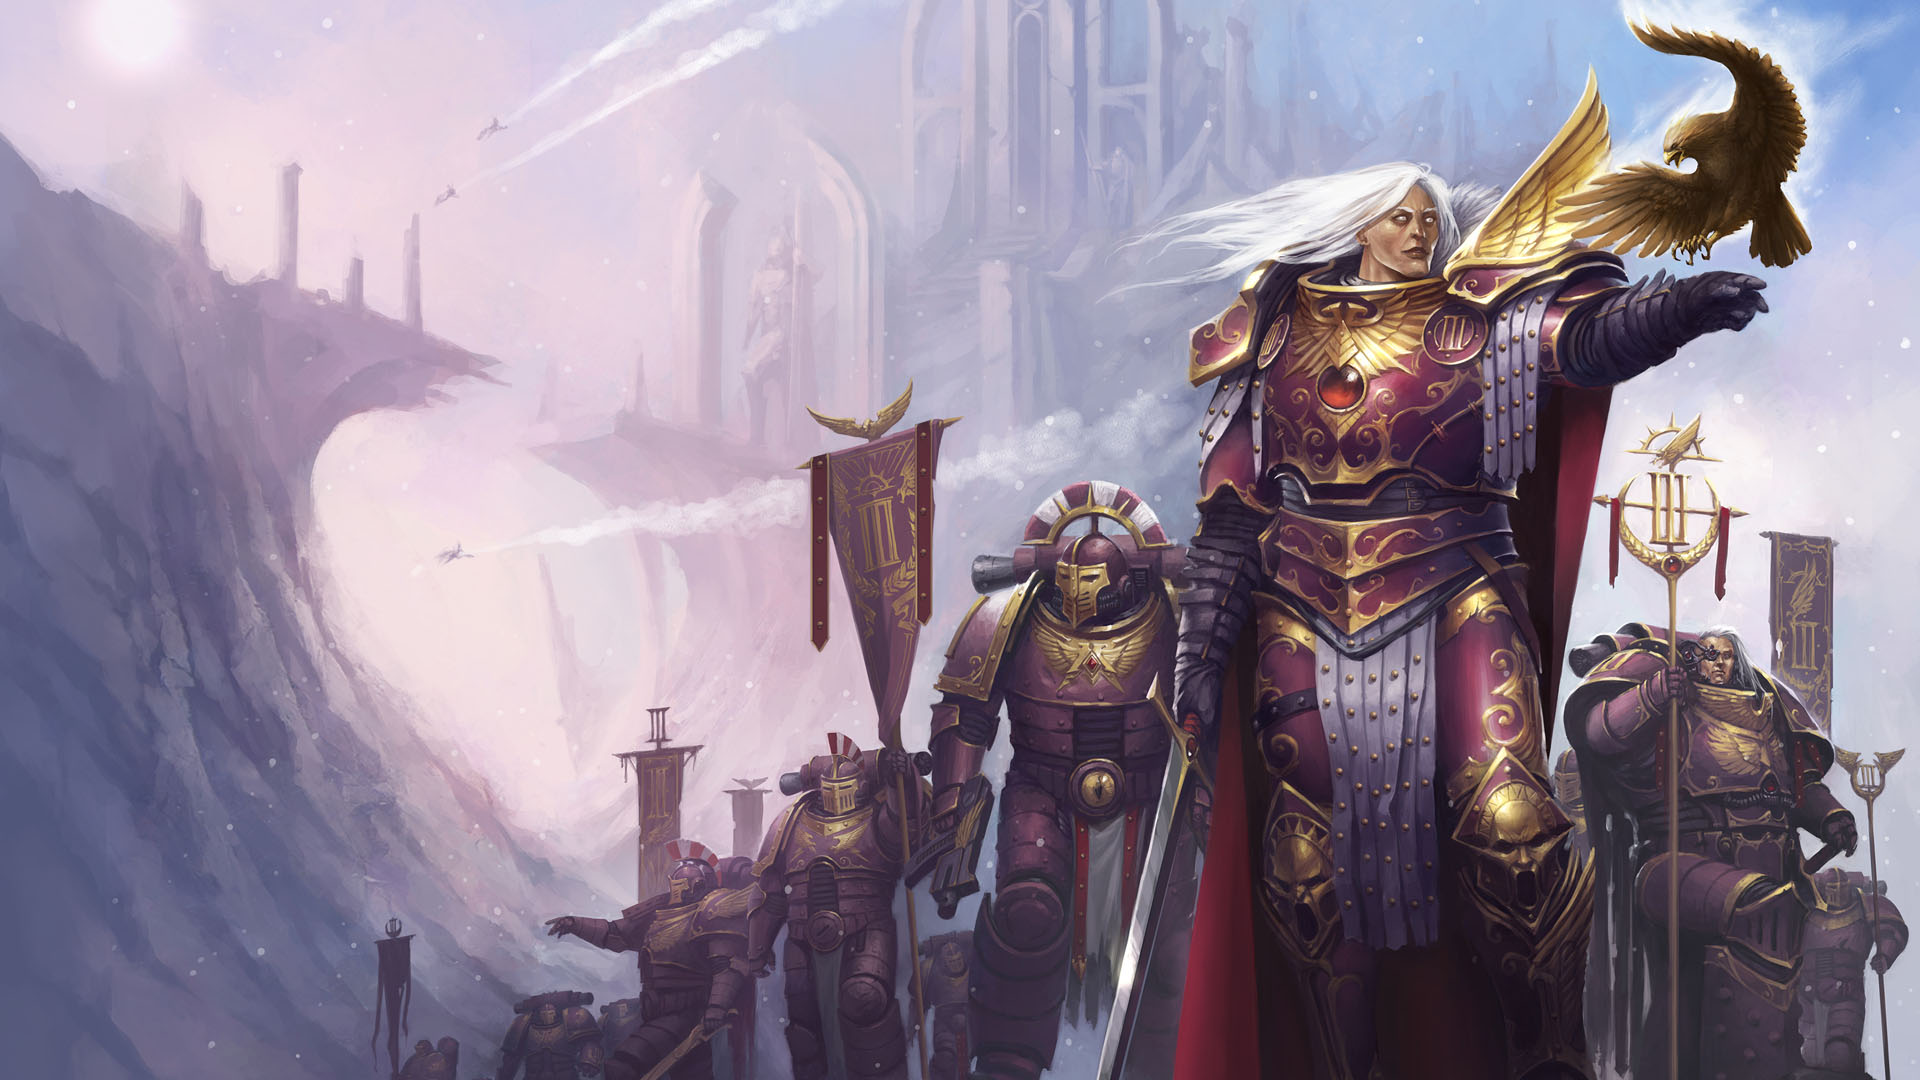 Warhammer artwork showing Fulgrim, Primarch of the Emperor